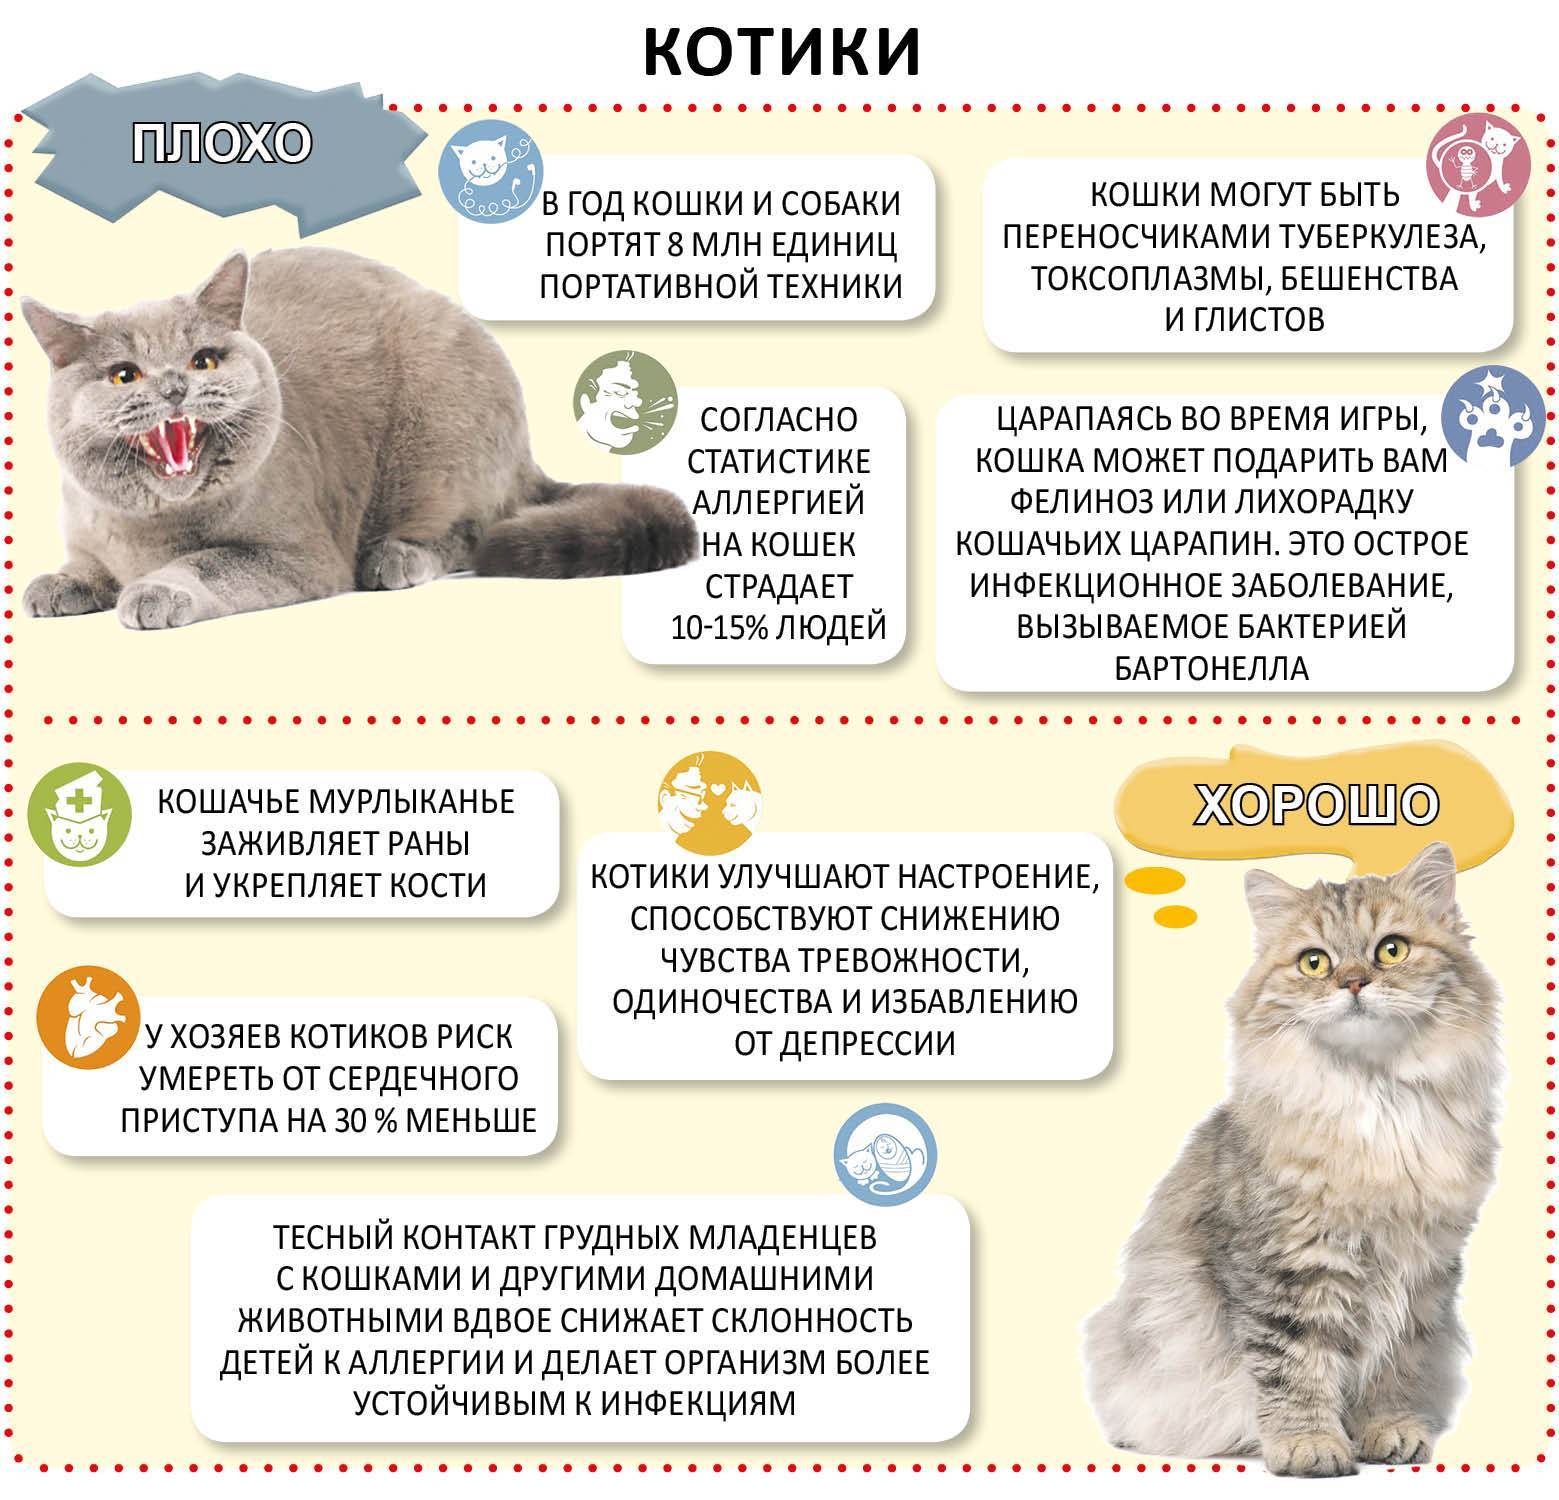 Подобрали котенка: порядок действий от ветеринара